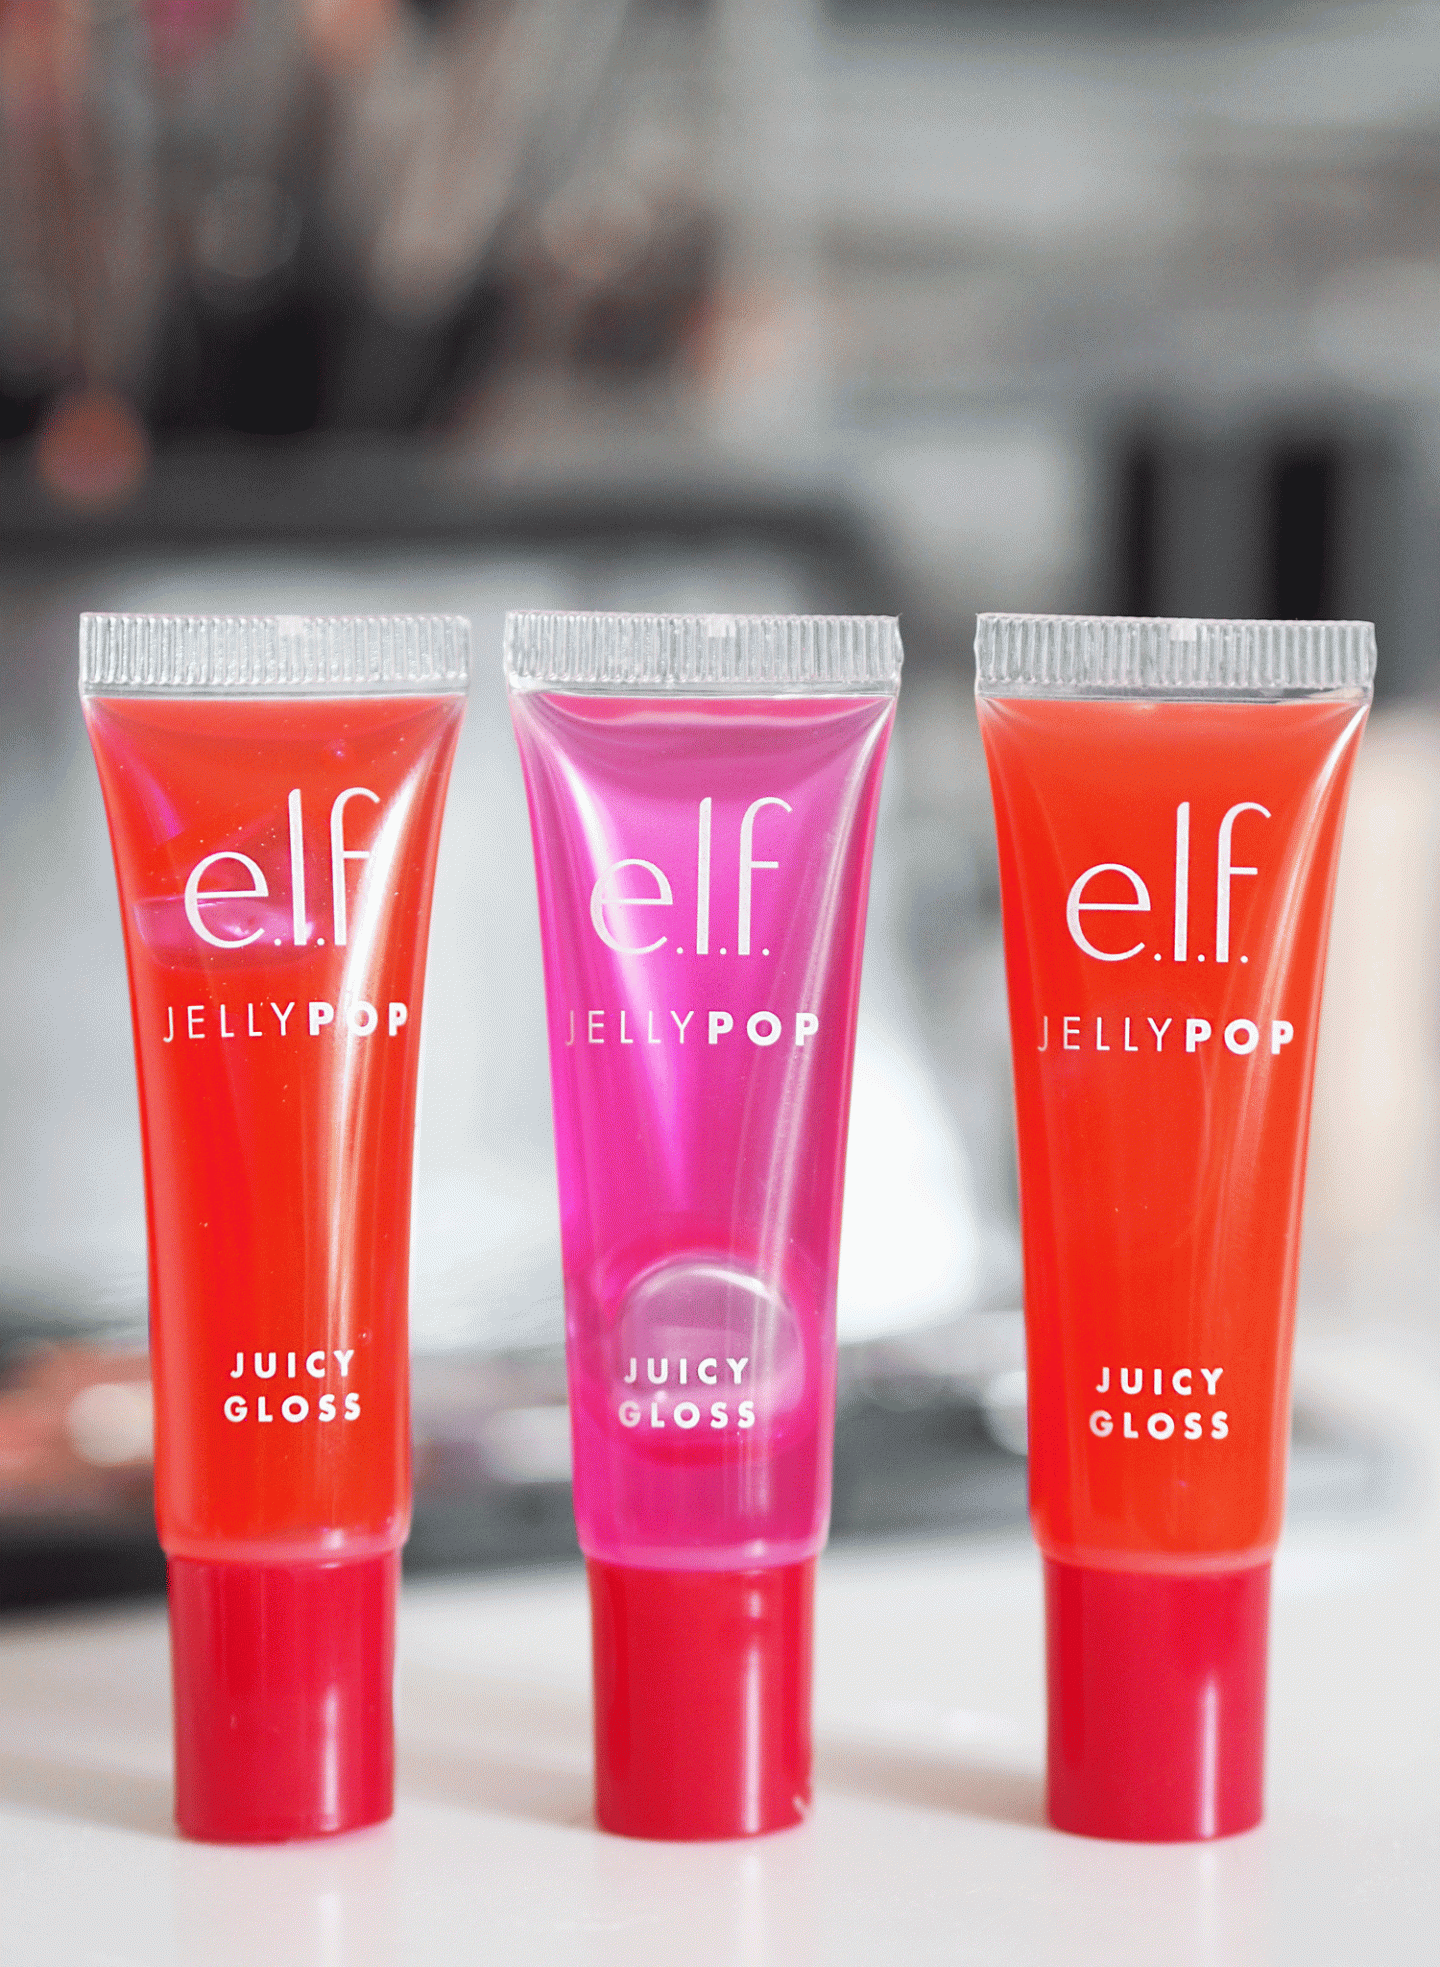 E.L.F Cosmetics Jellypop range UK